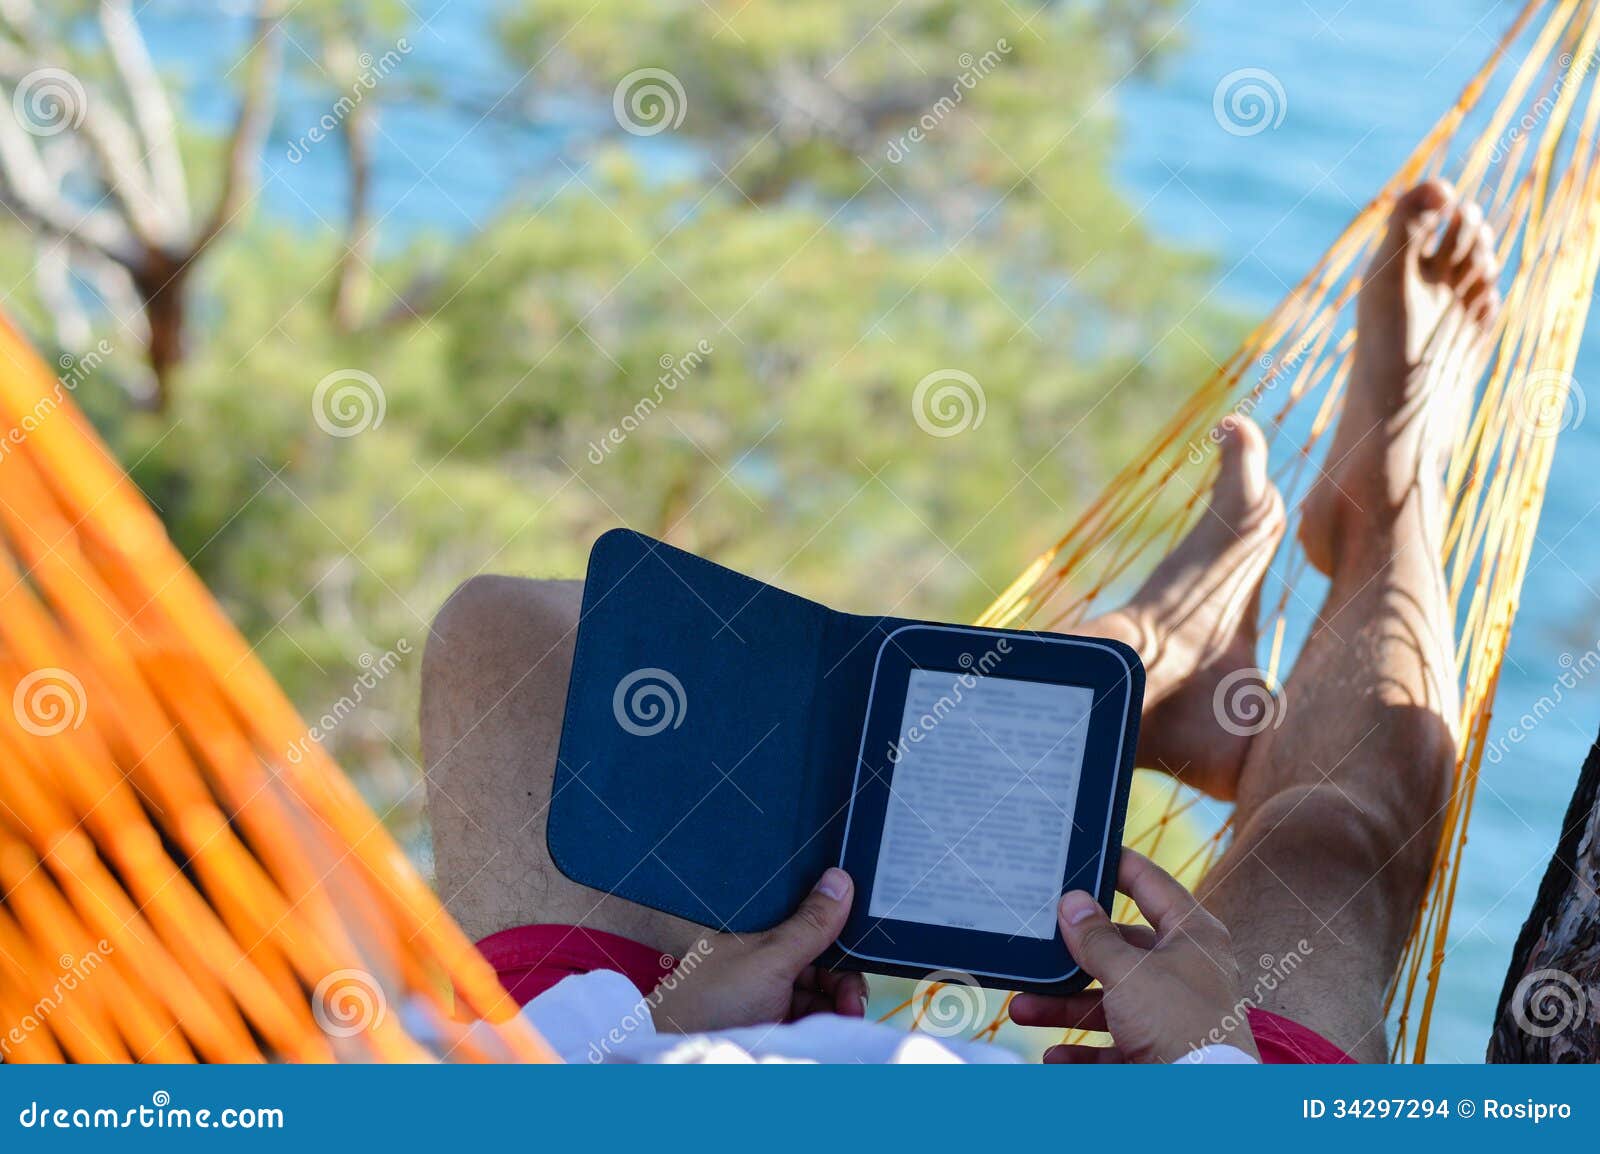 man resting in hammock on seashore and reading ebook